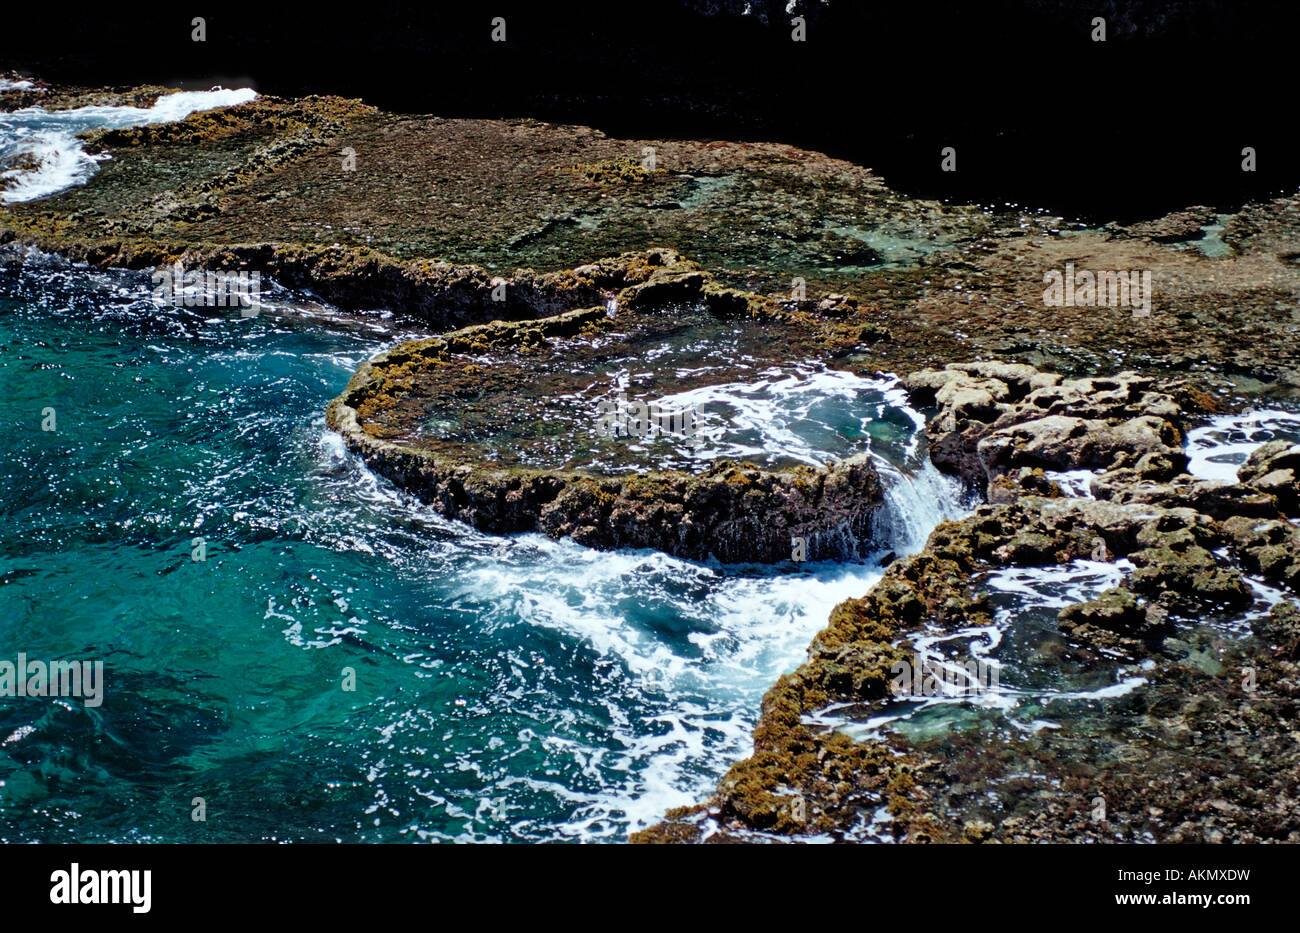 Terrazze in pietra Antille Olandesi Bonaire Mar dei Caraibi Washington Slagbaai National Park Boka Kokolishi Foto Stock